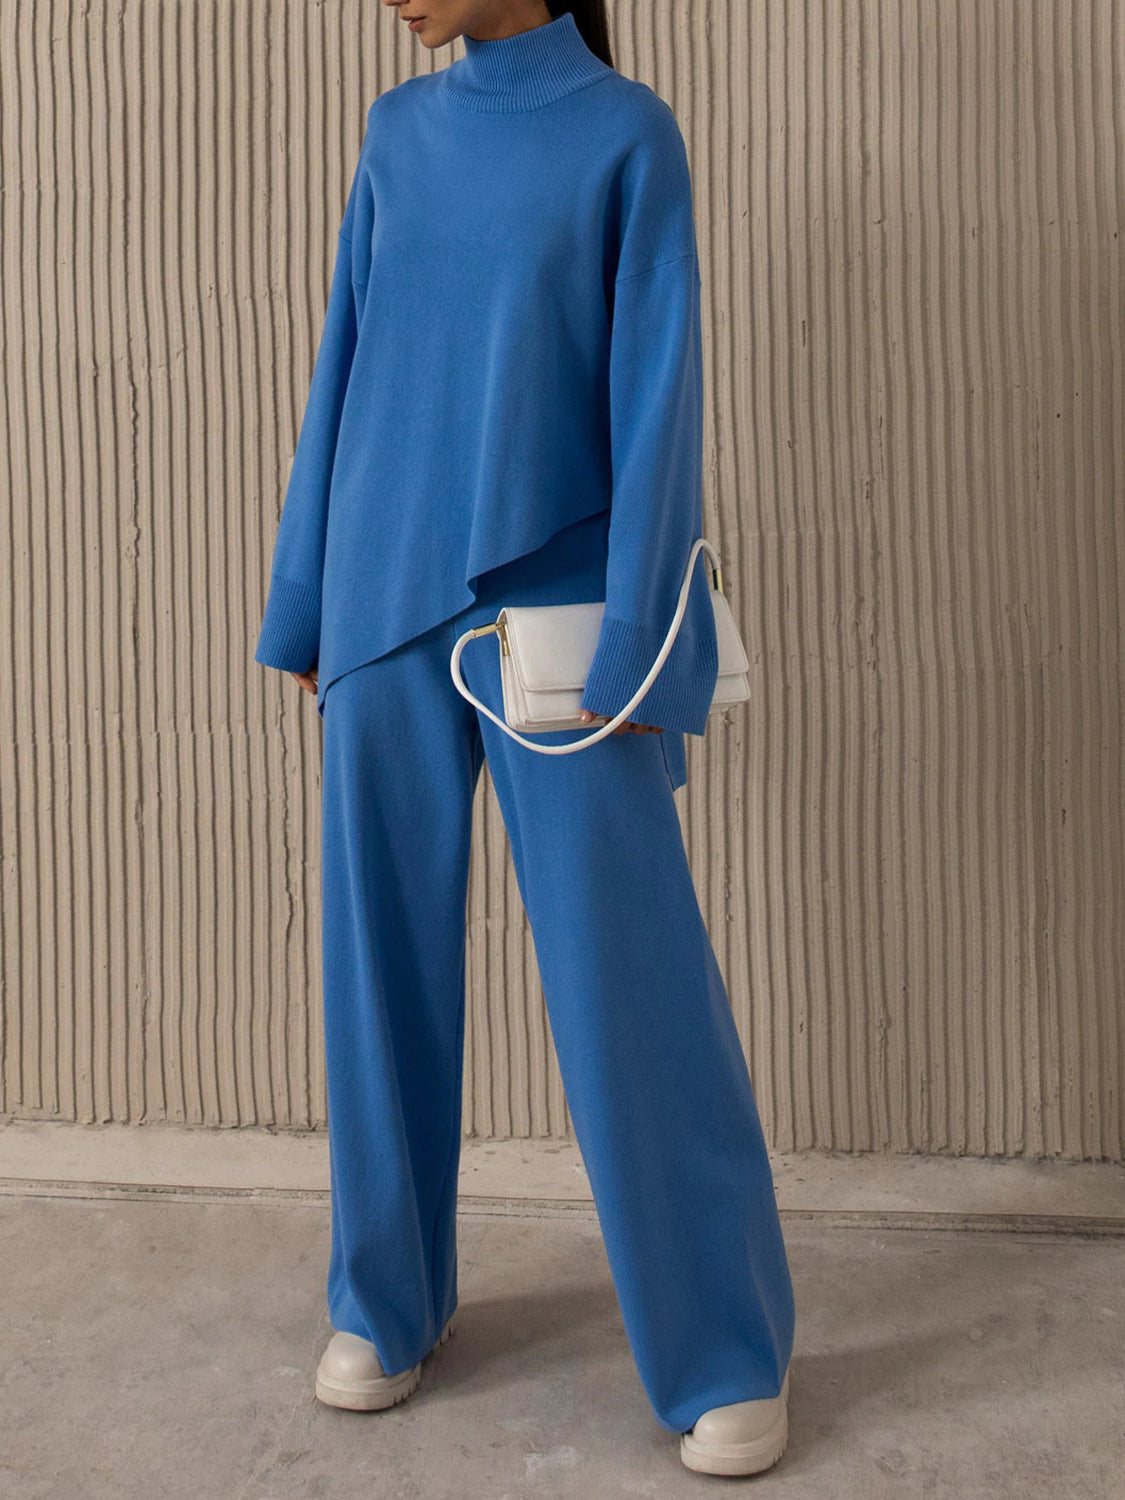 Asymmetrical Hem Knit Top and Pants Set Print on any thing USA/STOD clothes